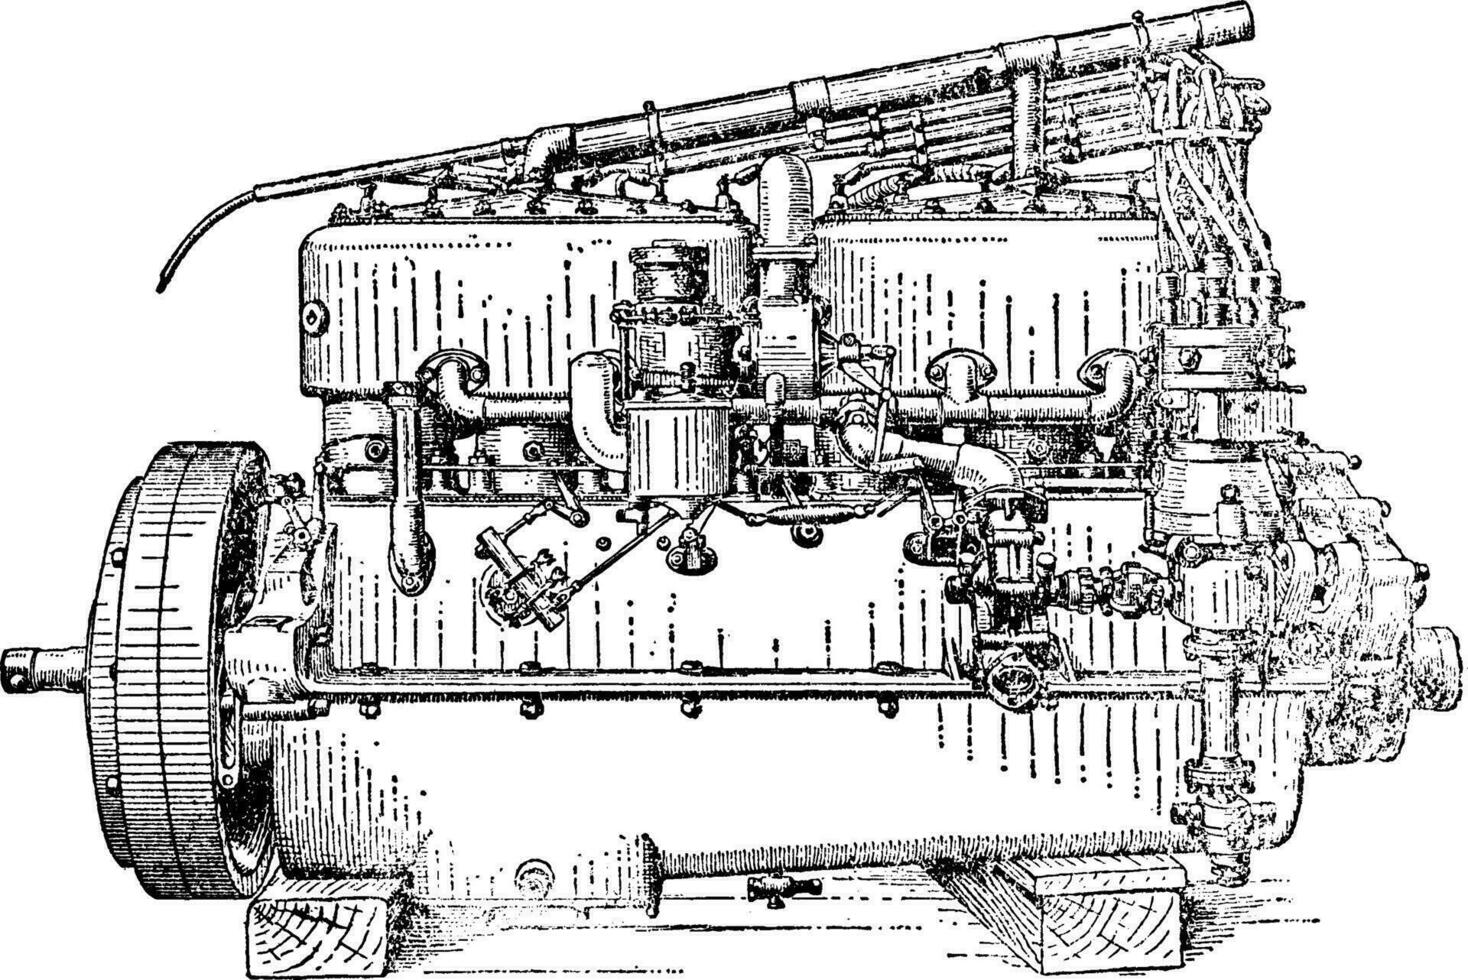 carburator kant visie van zes cilinder broodjes royce motor, wijnoogst illustratie. vector